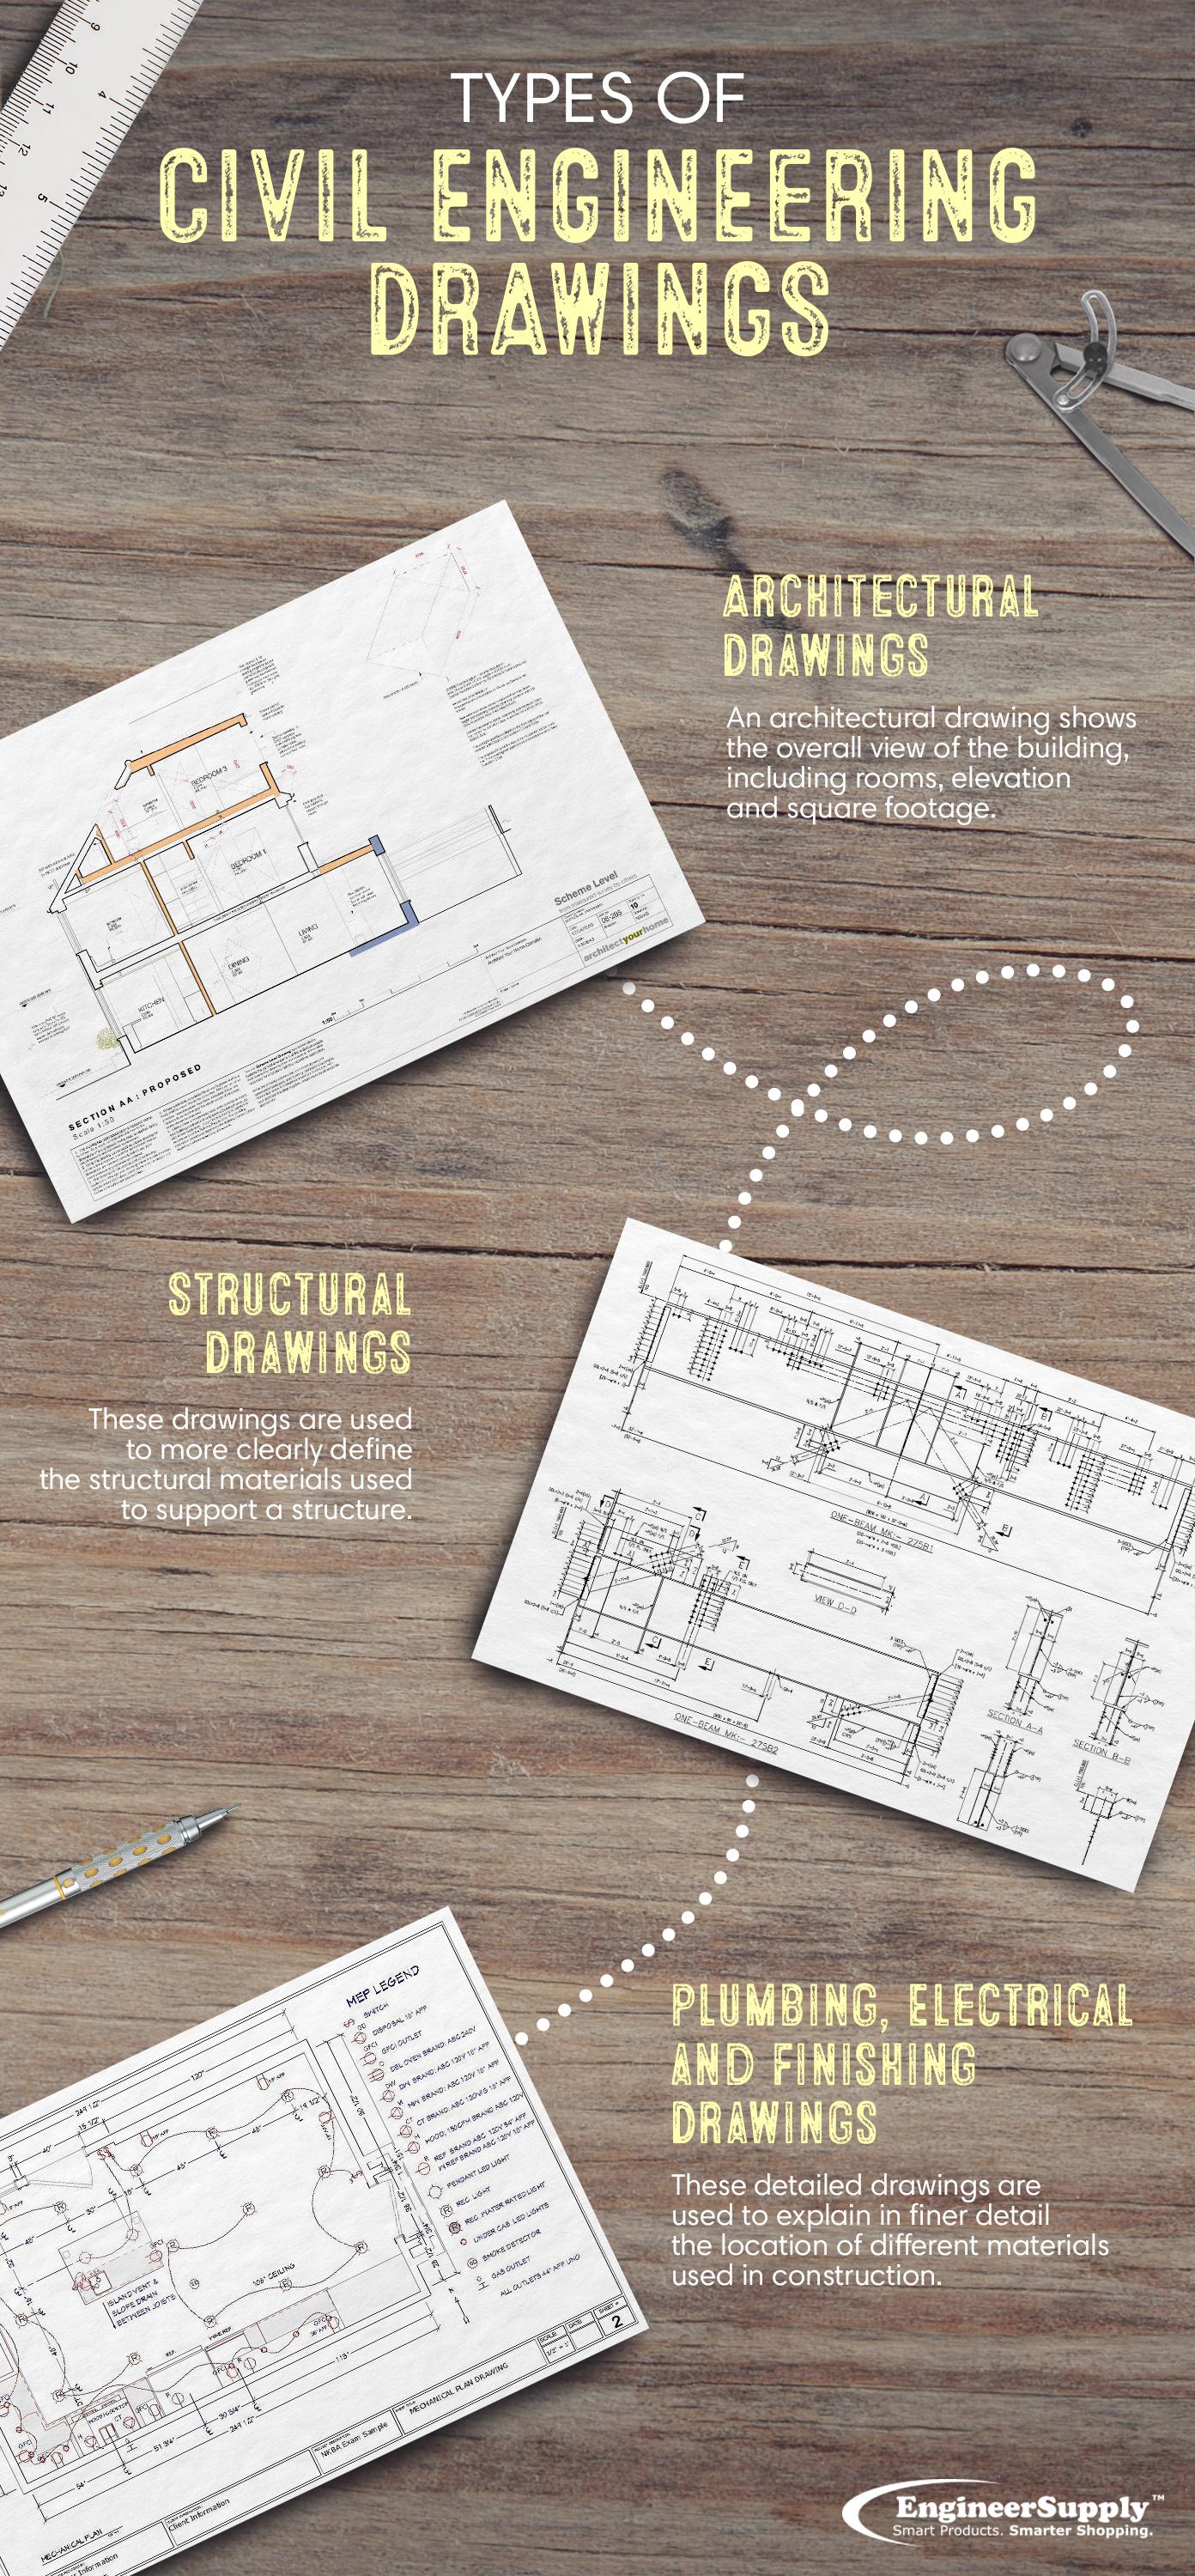 civil engineering blueprints